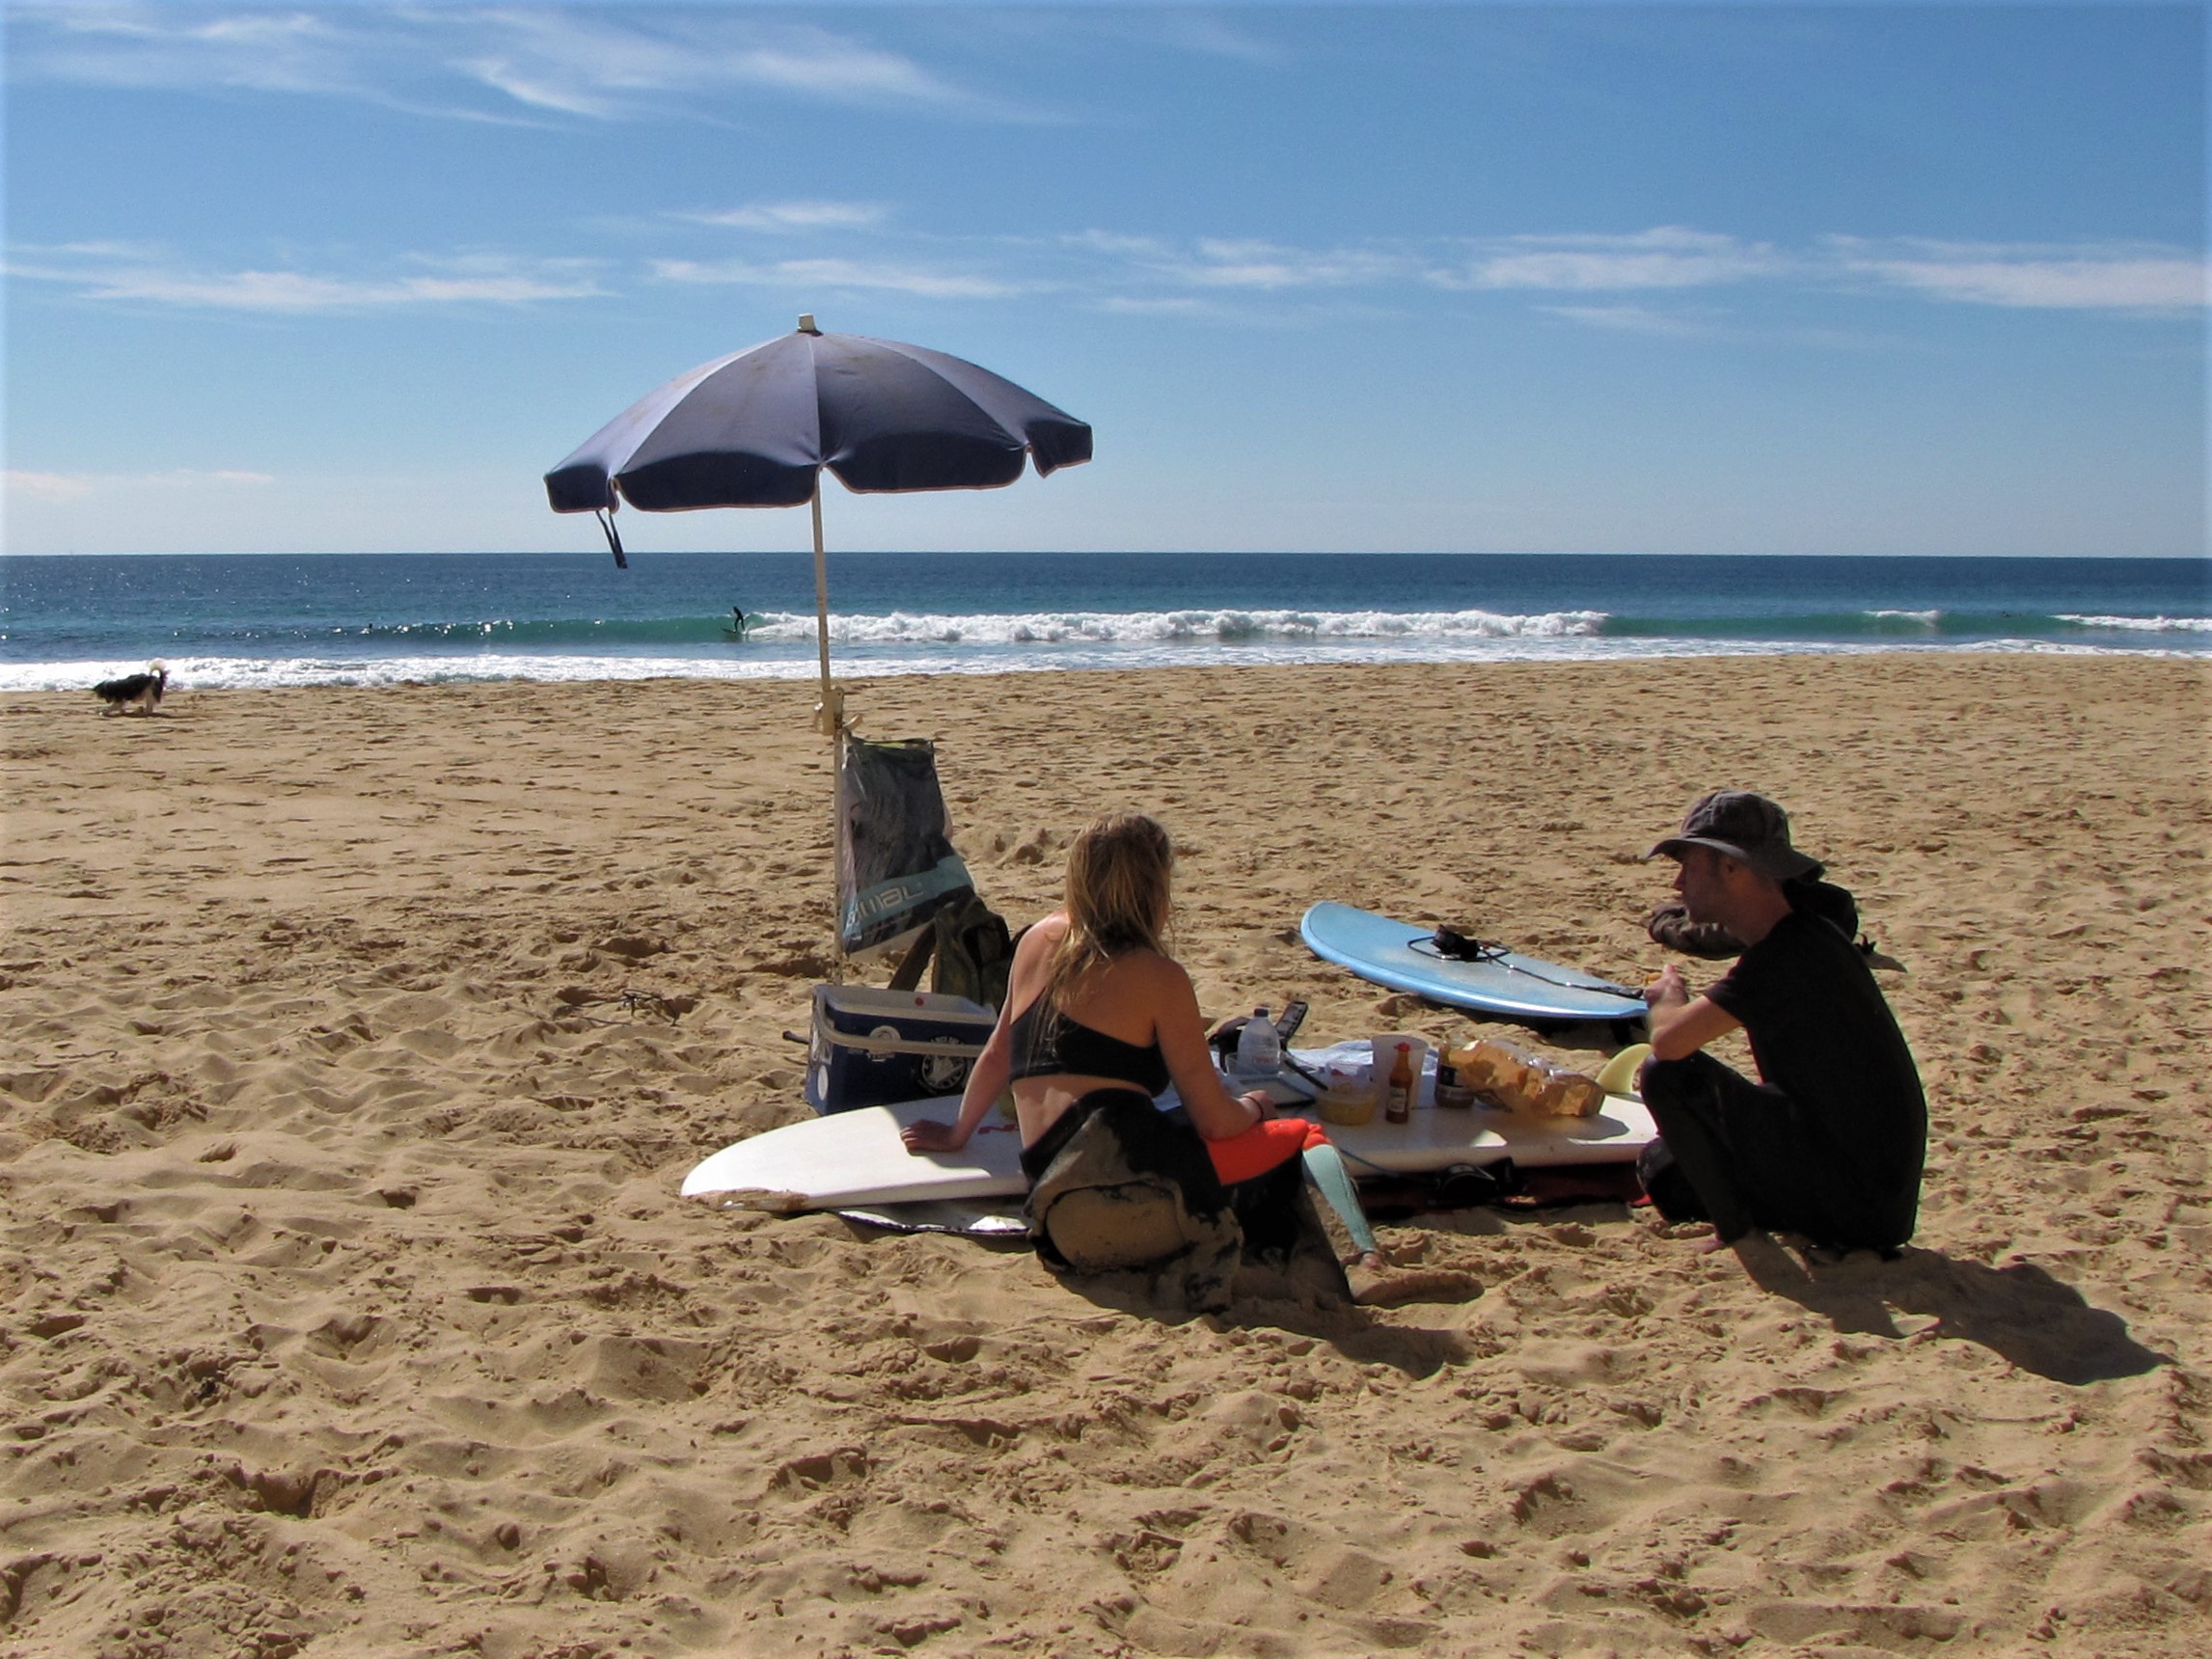 surf picknick in the sand on the beach of Praia da Luz